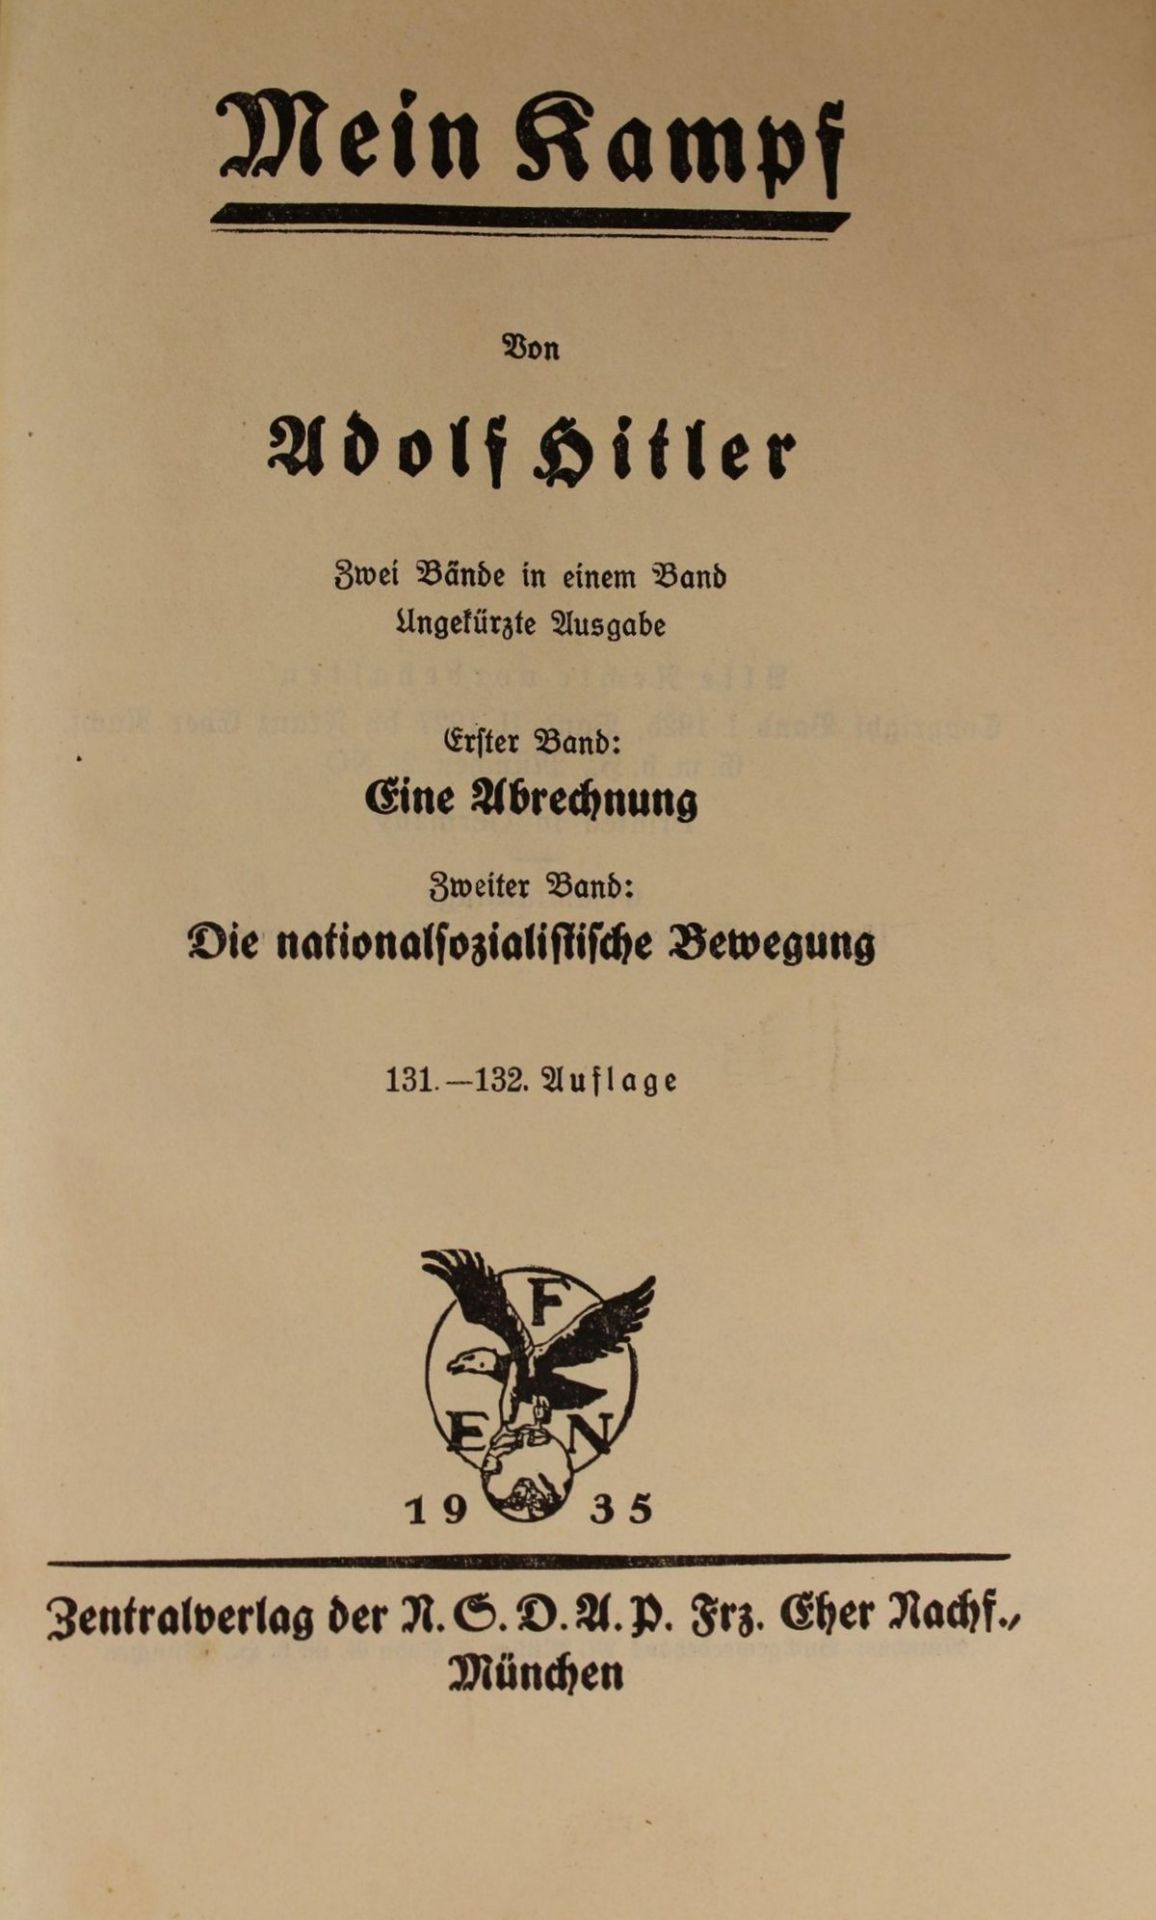 A.H., Mein Kampf, blaue Ausgabe 1935, innen Widmung. - Bild 3 aus 4